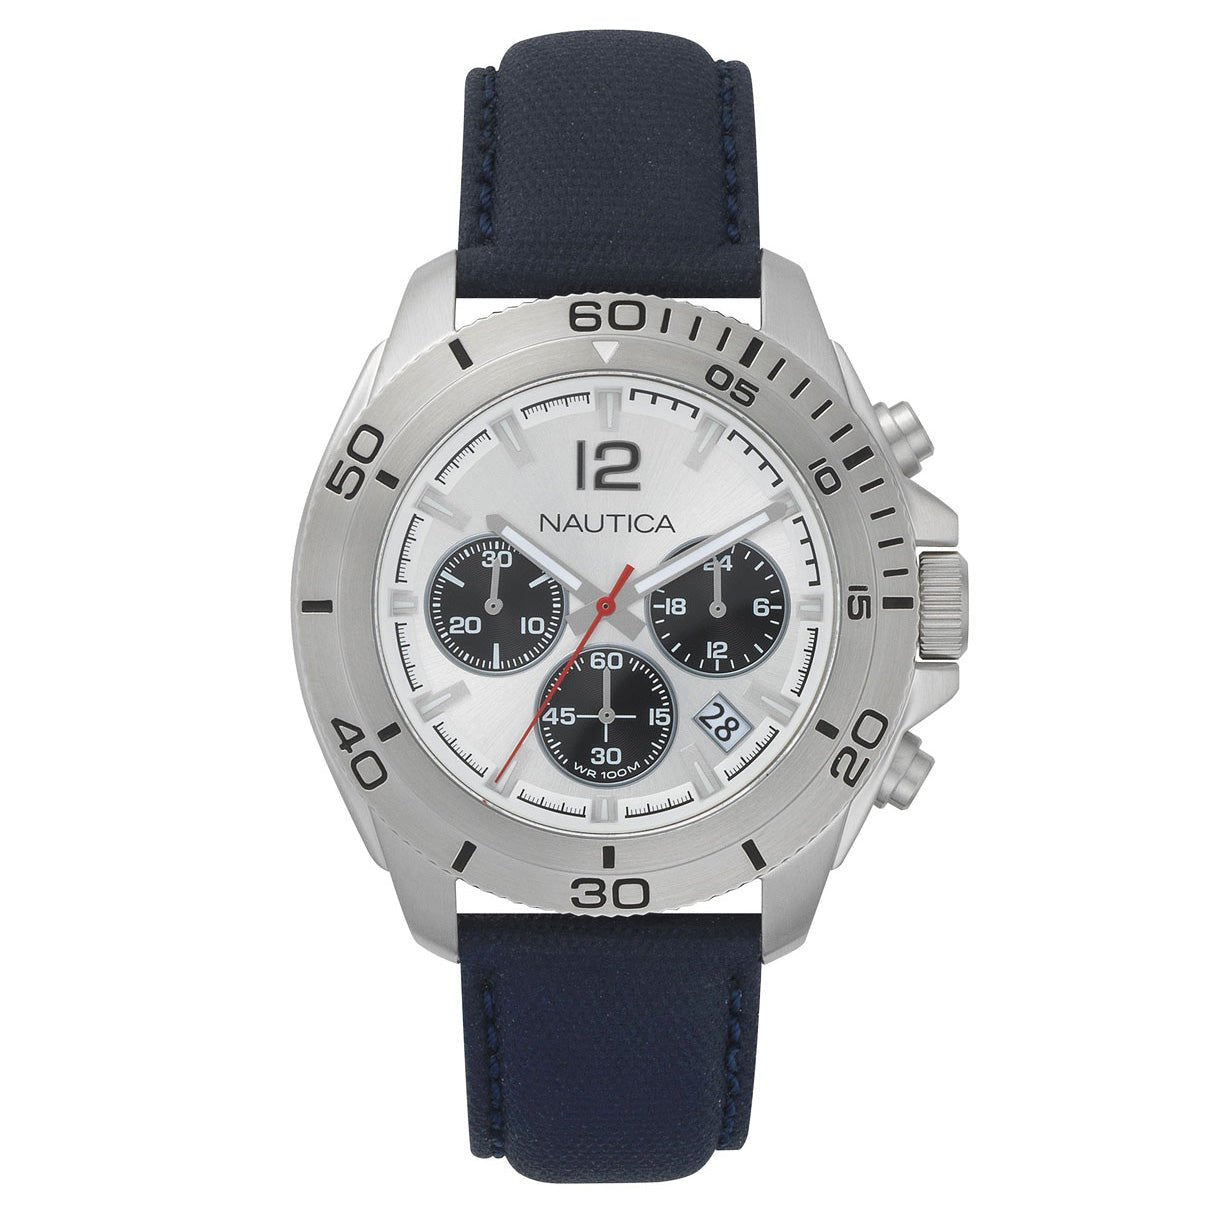 Nautica Men's Watch Chronograph Andover Navy NAPADR001 - Watches & Crystals